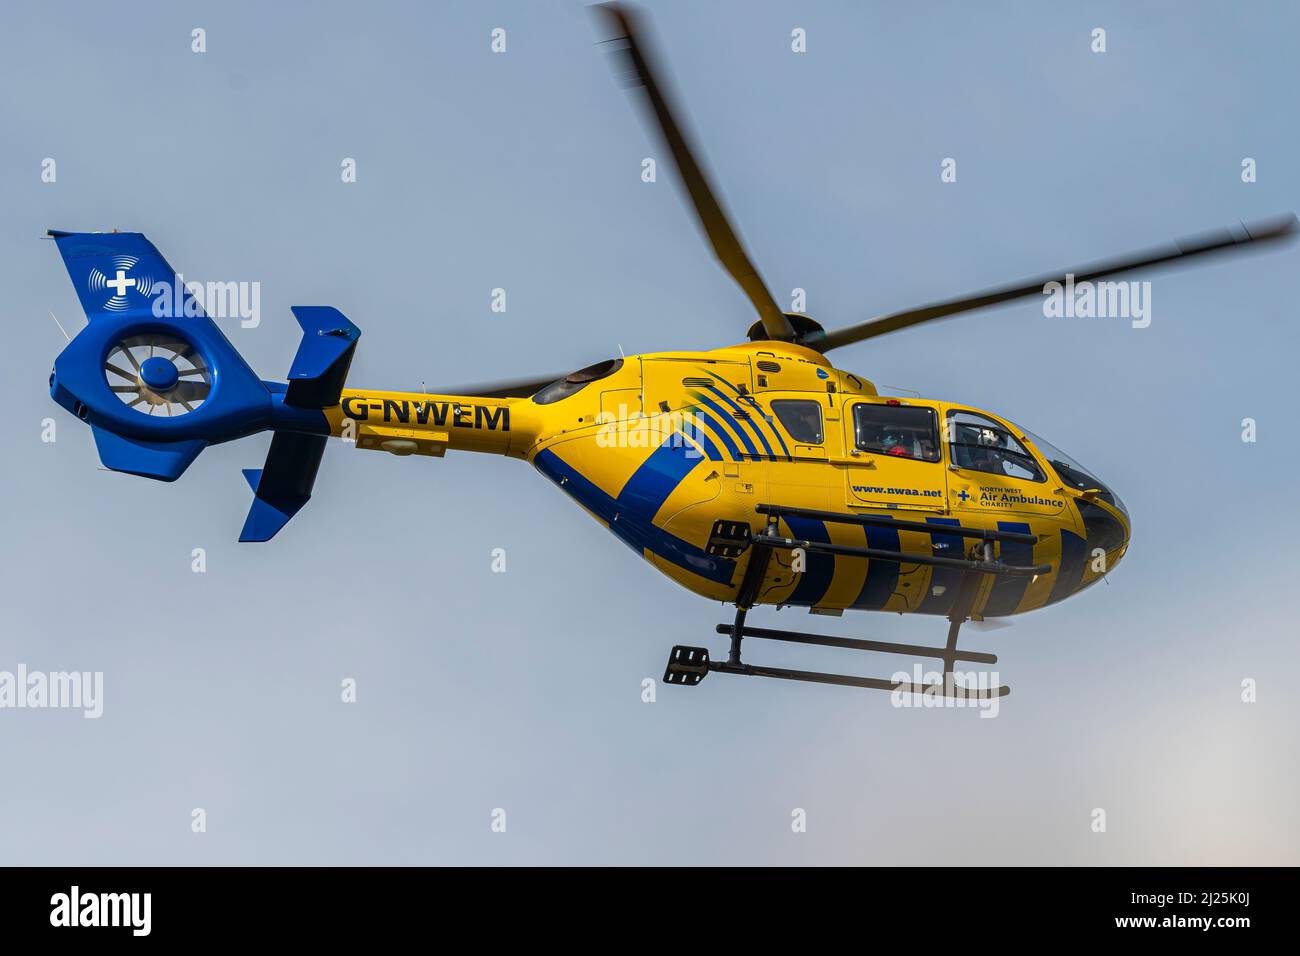 Helicóptero de ambulancia aérea del noroeste, Cheshire, Reino Unido Foto de stock